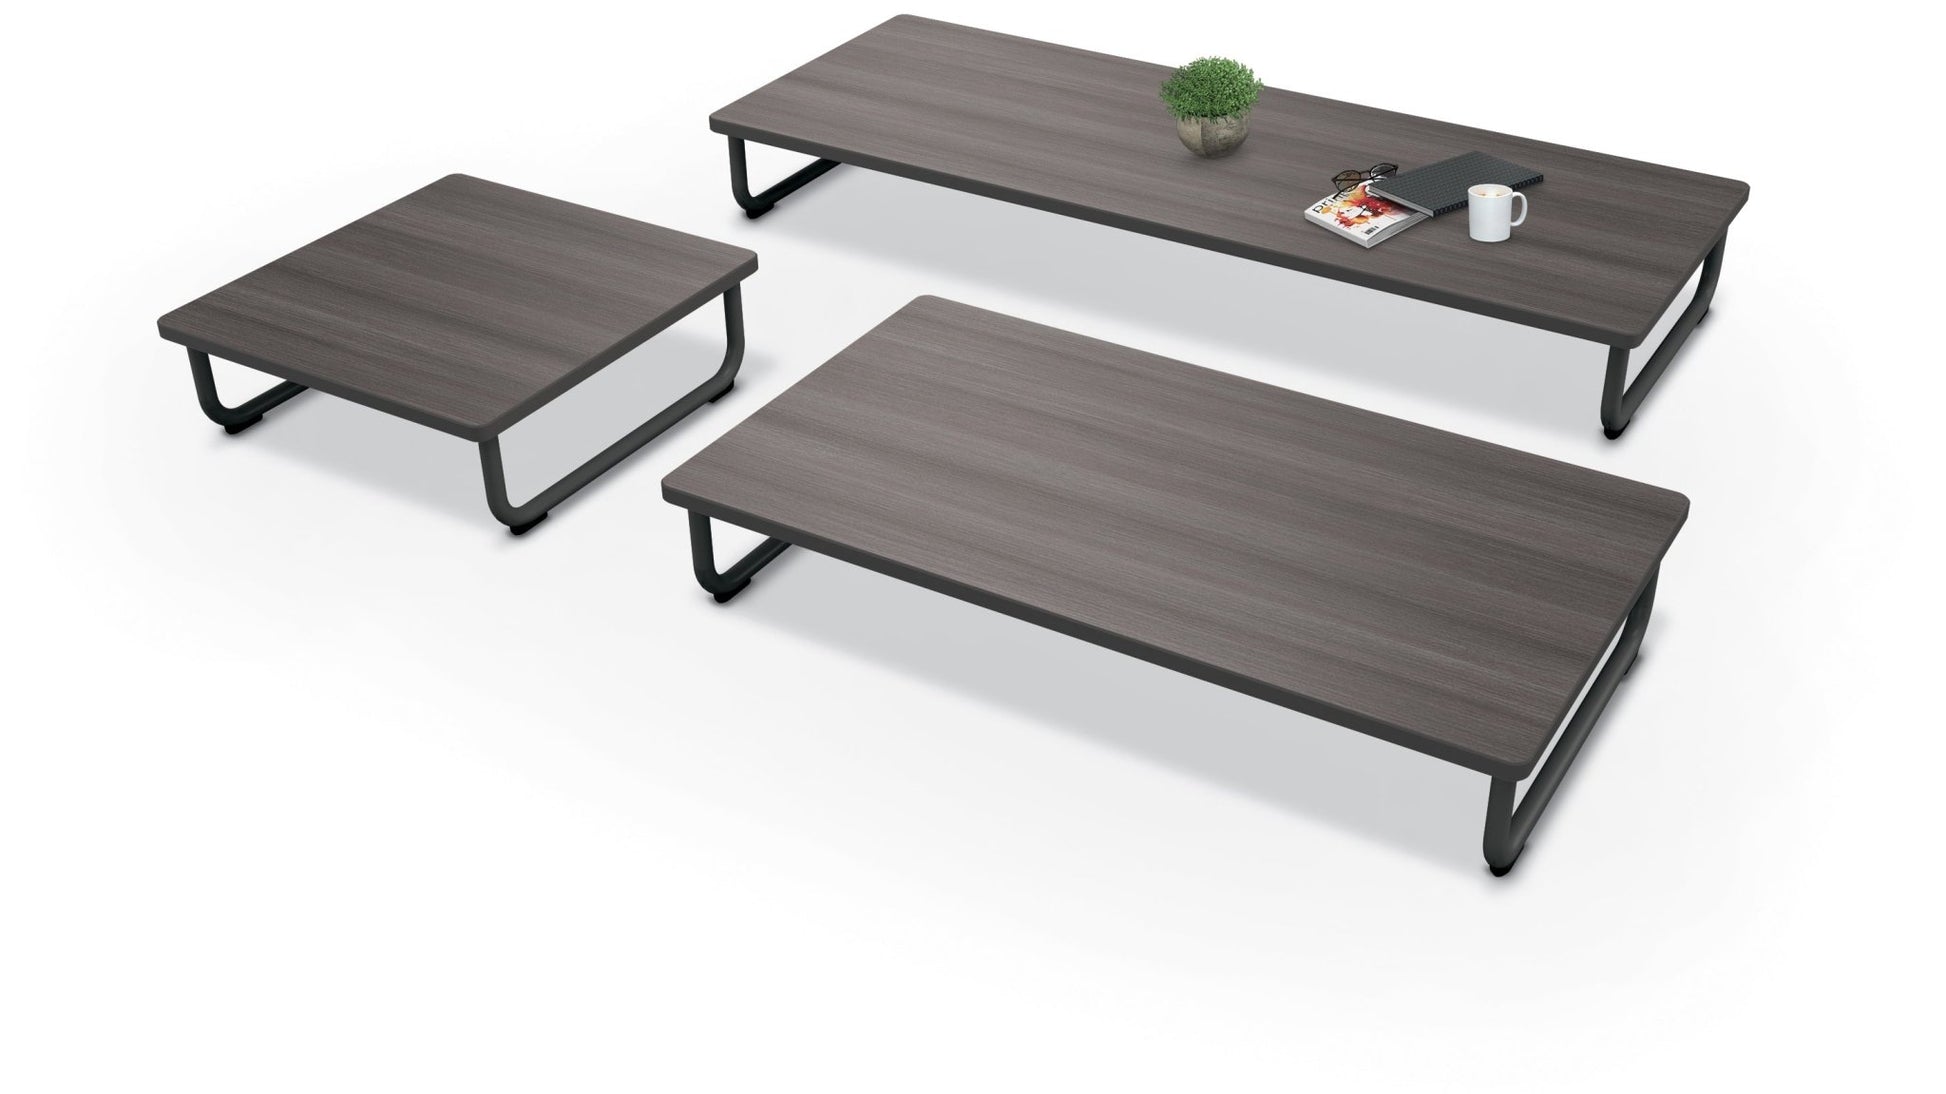 Mooreco Akt Lounge Sofa Table - High-pressure Laminate (HPL) Top Surface - SchoolOutlet